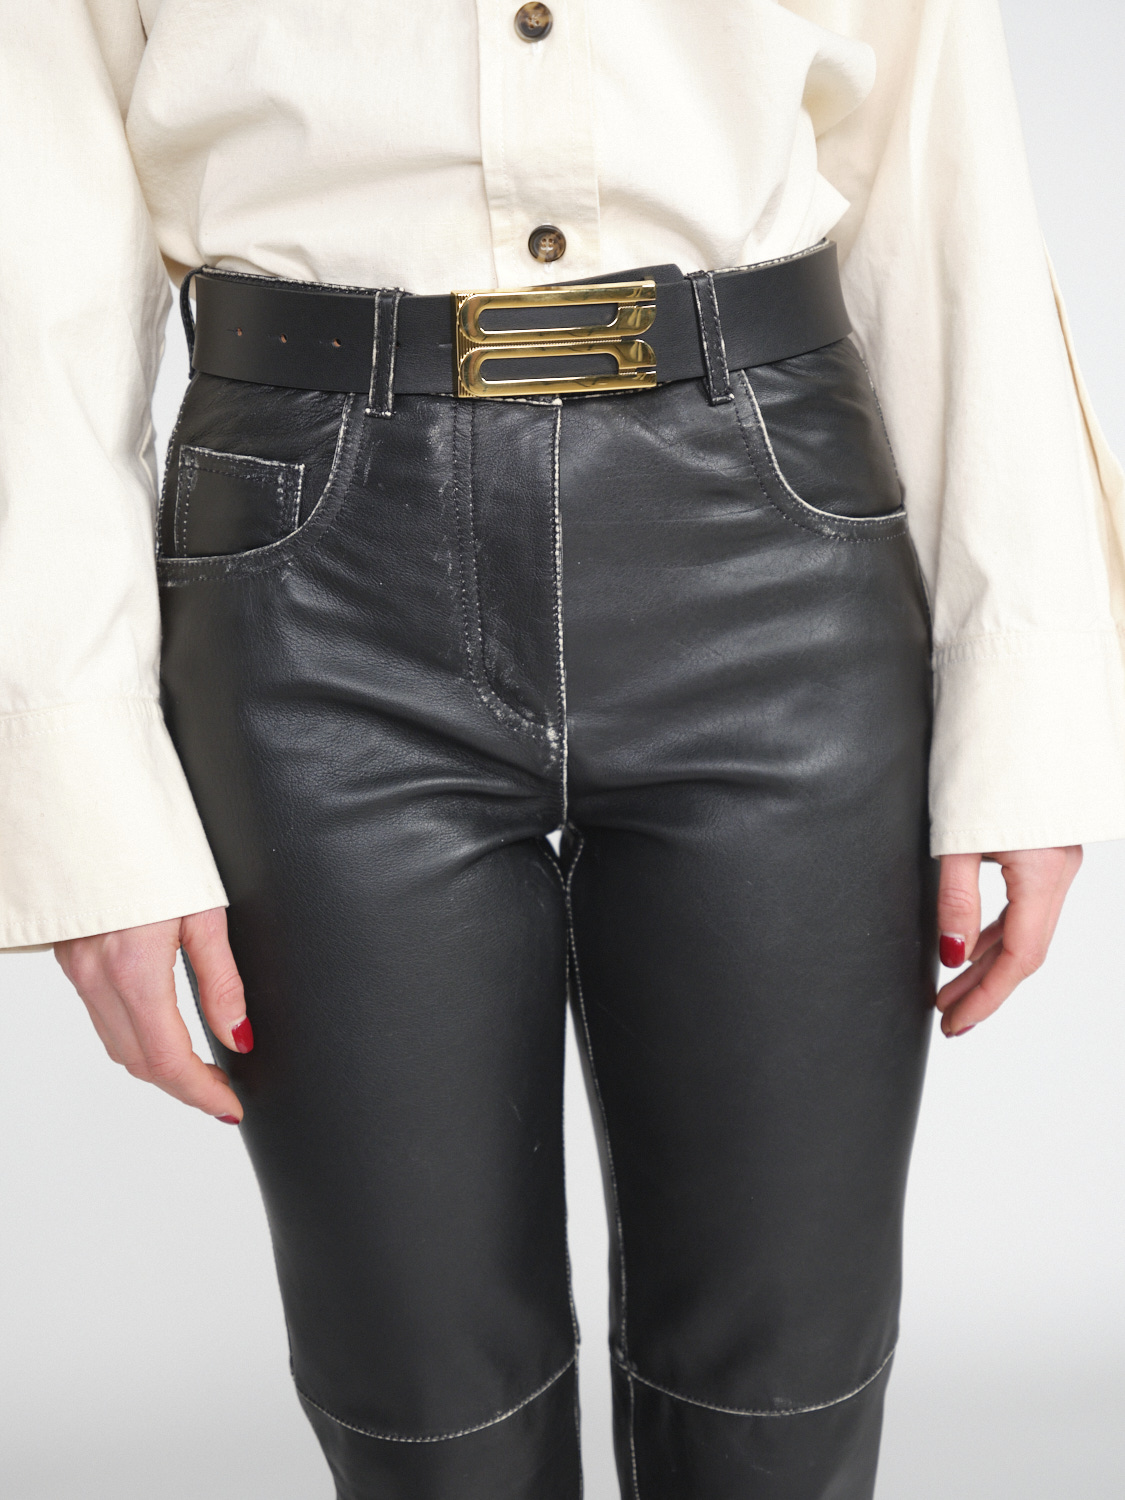 Victoria Beckham Jumbo Frame - Cinturón de piel con hebilla dorada  negro S